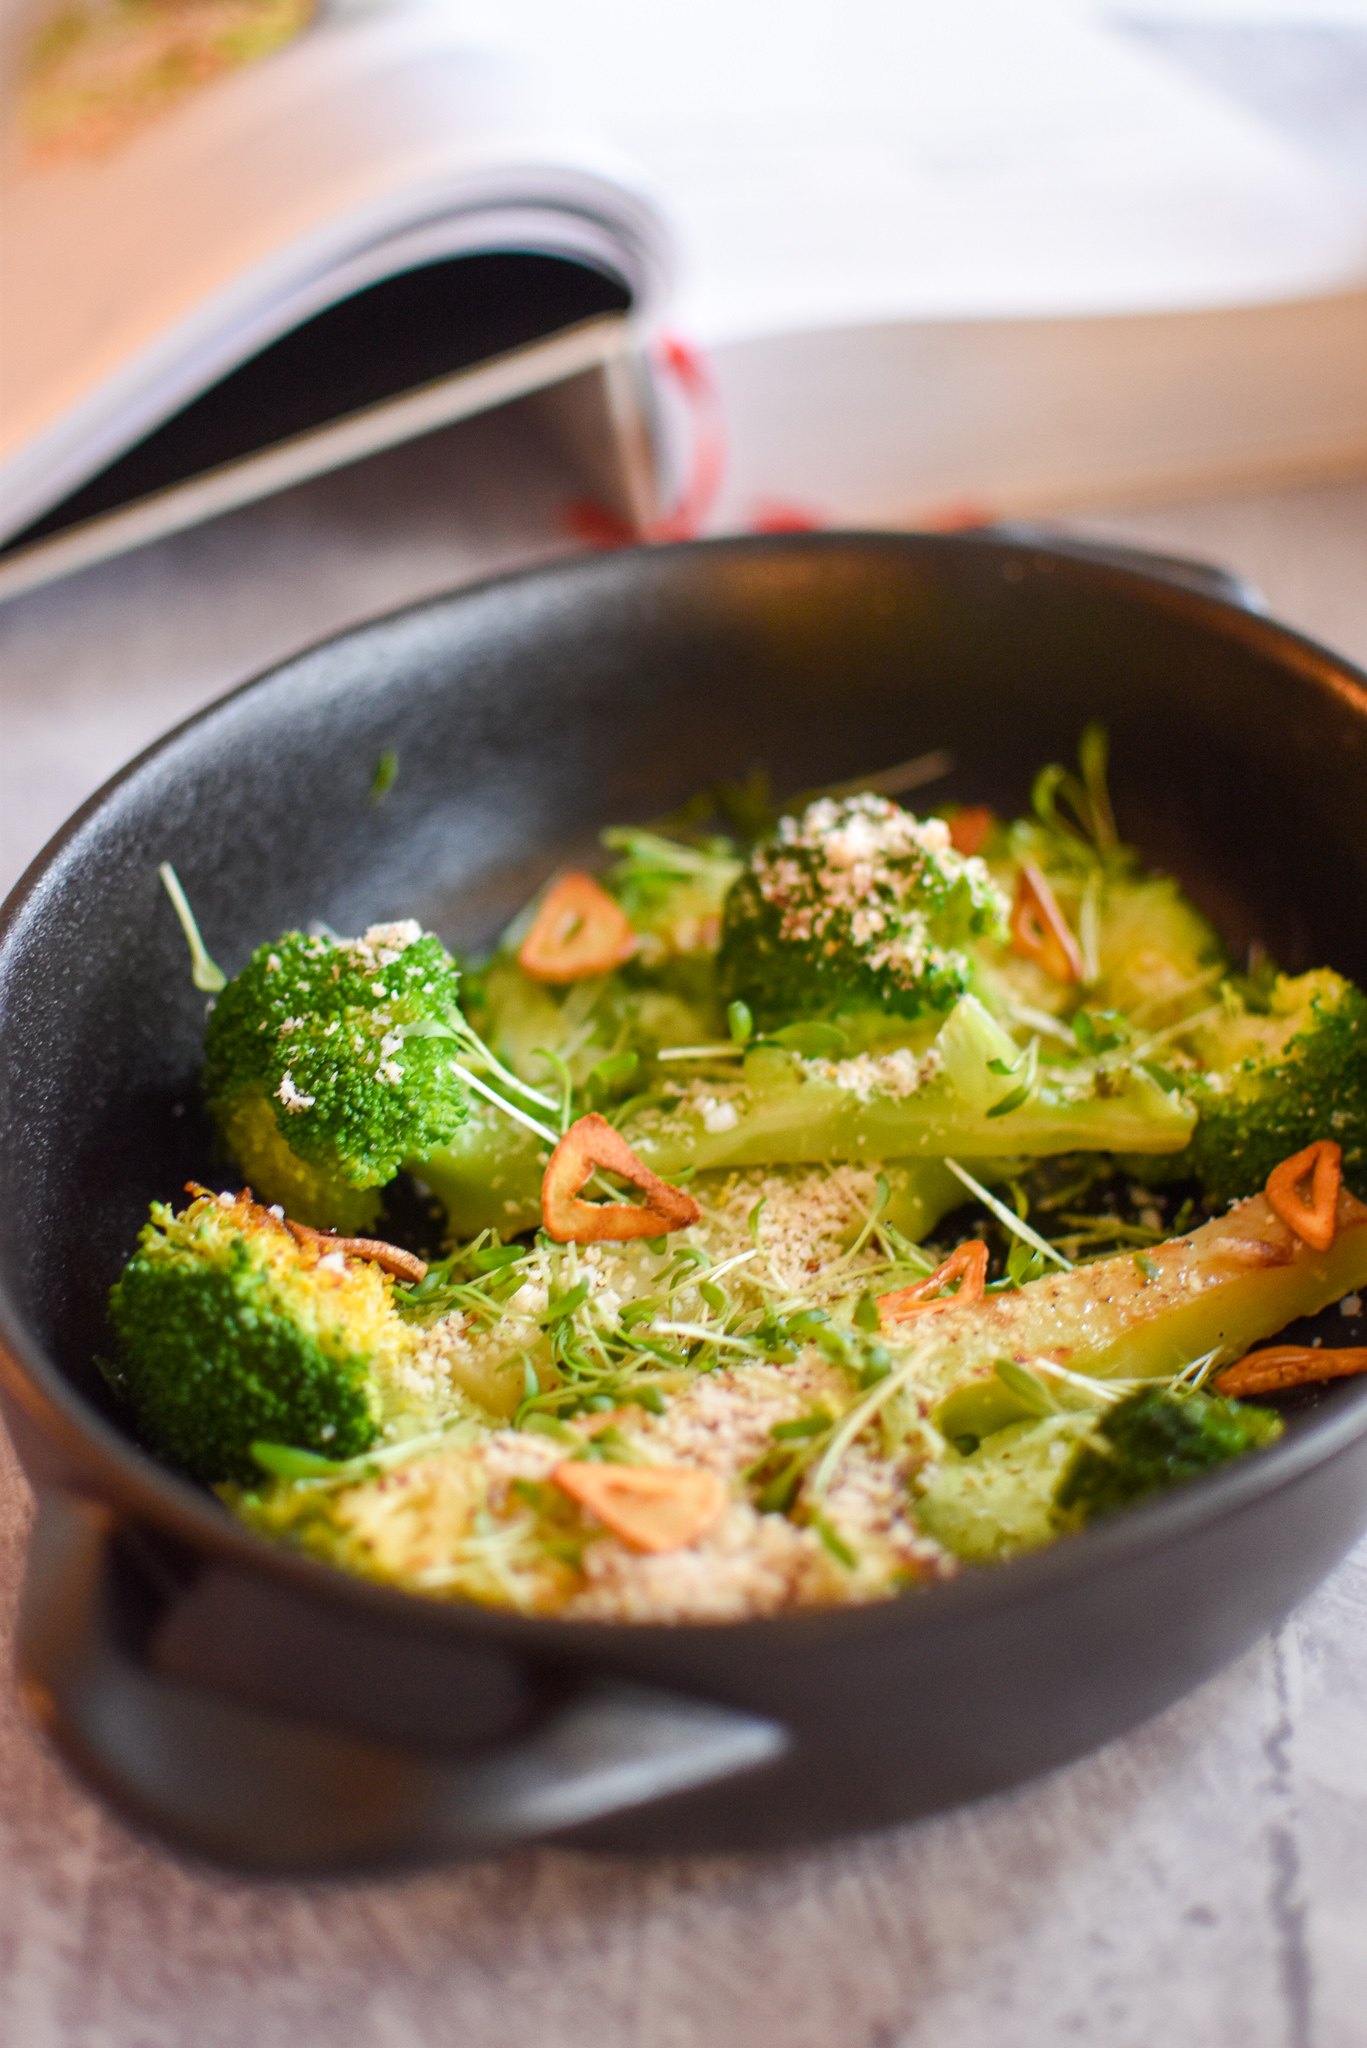 Broccoli met chips van knoflook en basilicummayonaise - Seppe Nobels